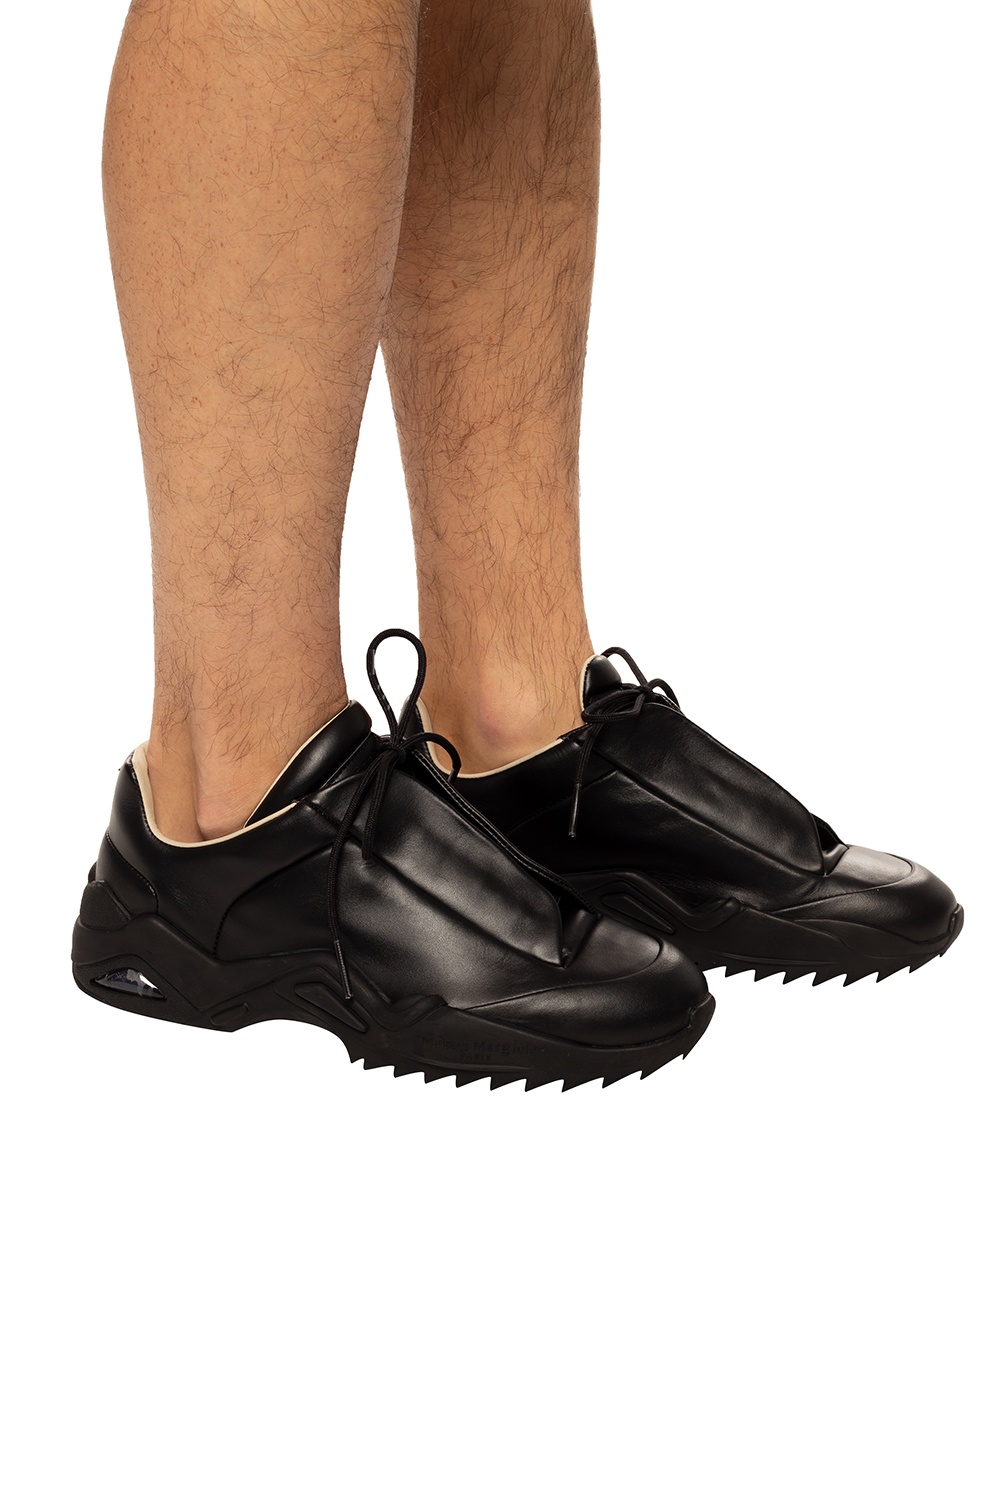 Wasserette Medisch wangedrag Nylon Maison Margiela 'Future' sneakers | Men's Shoes | Vitkac